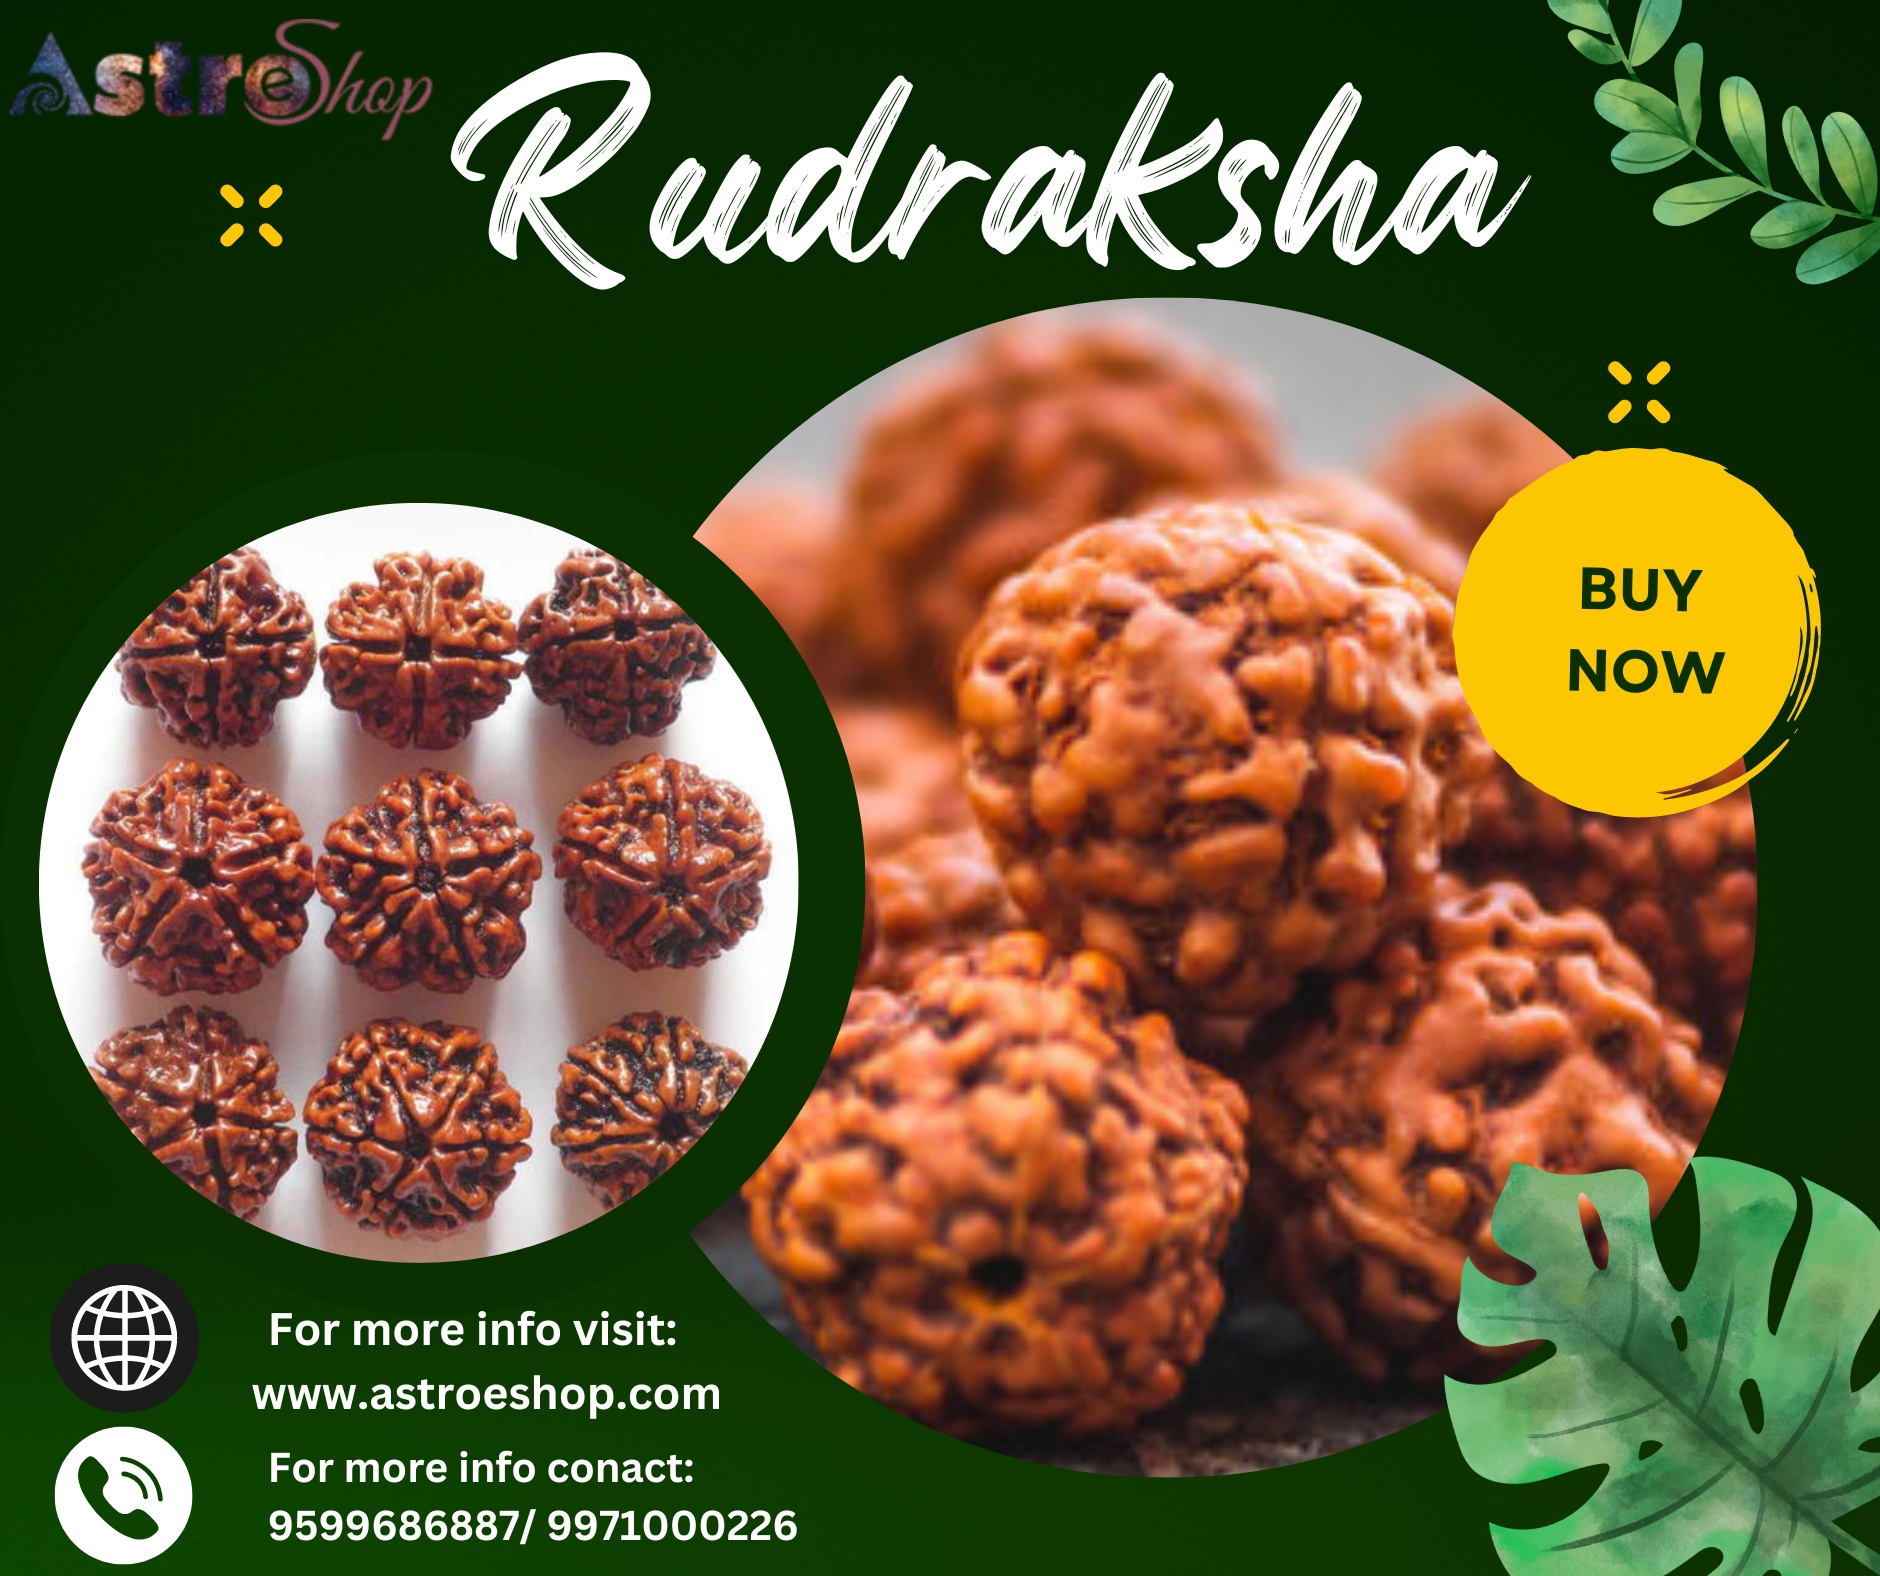 Wellness Beads: Rudraksha Health Benefits Revealed